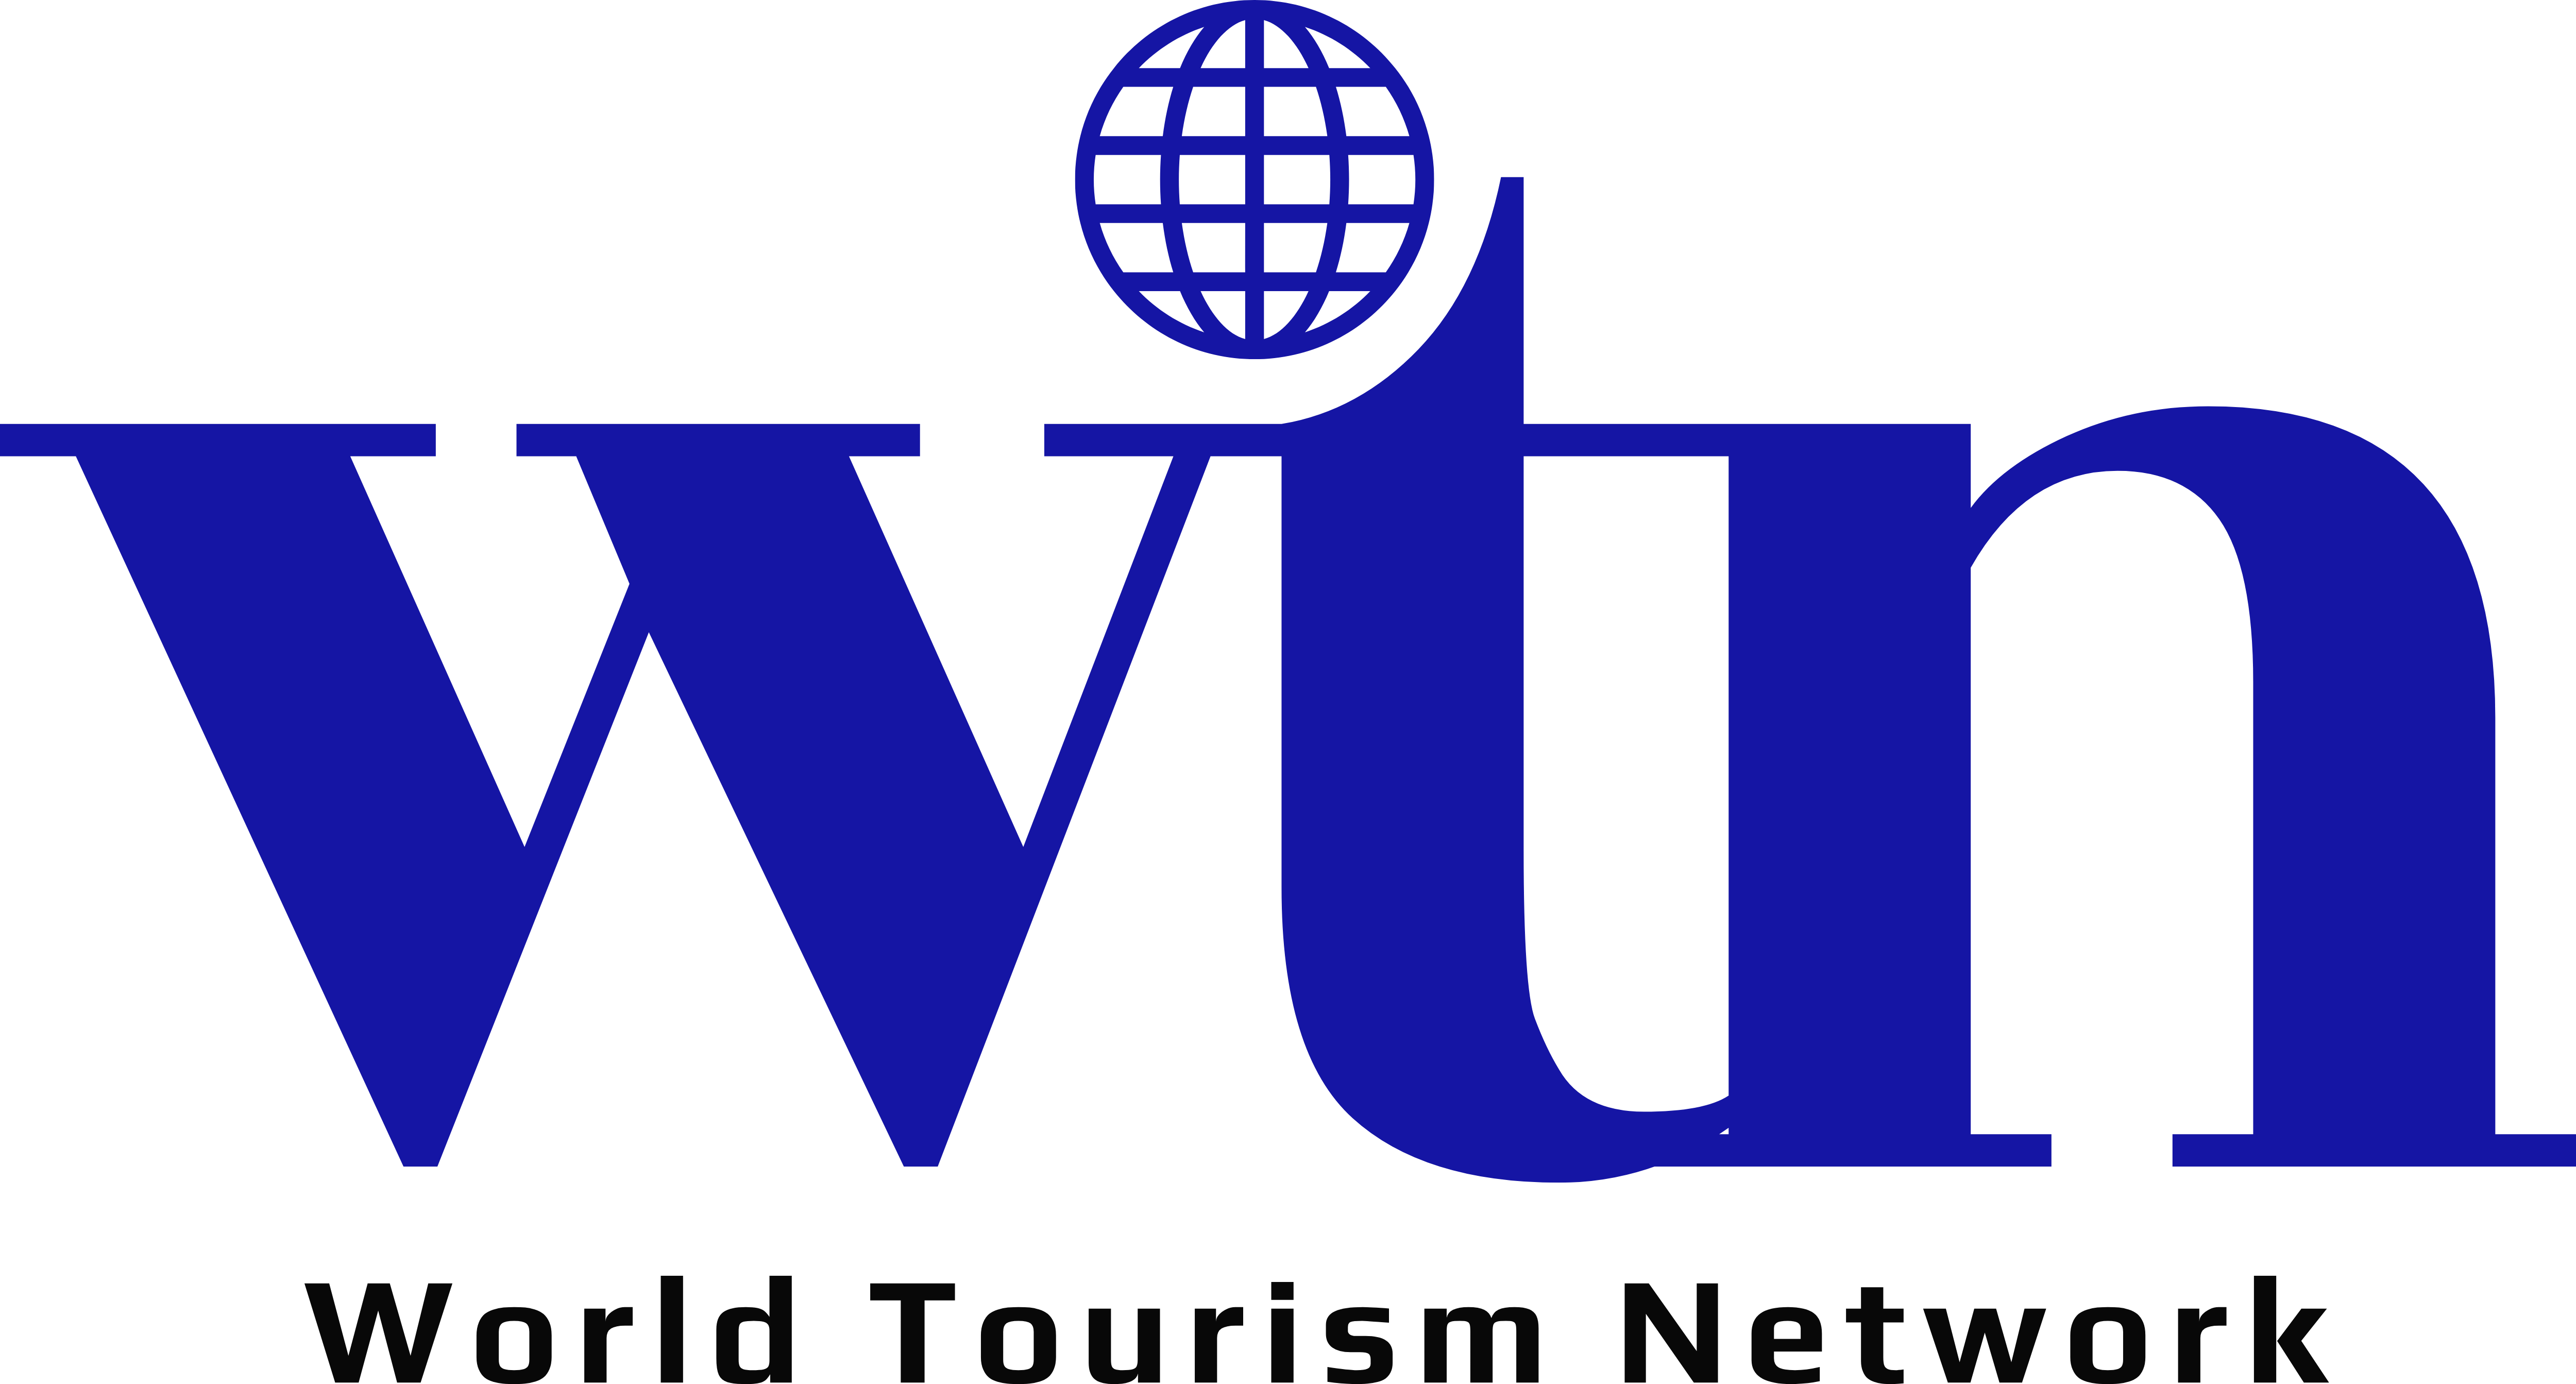 world tourism logo